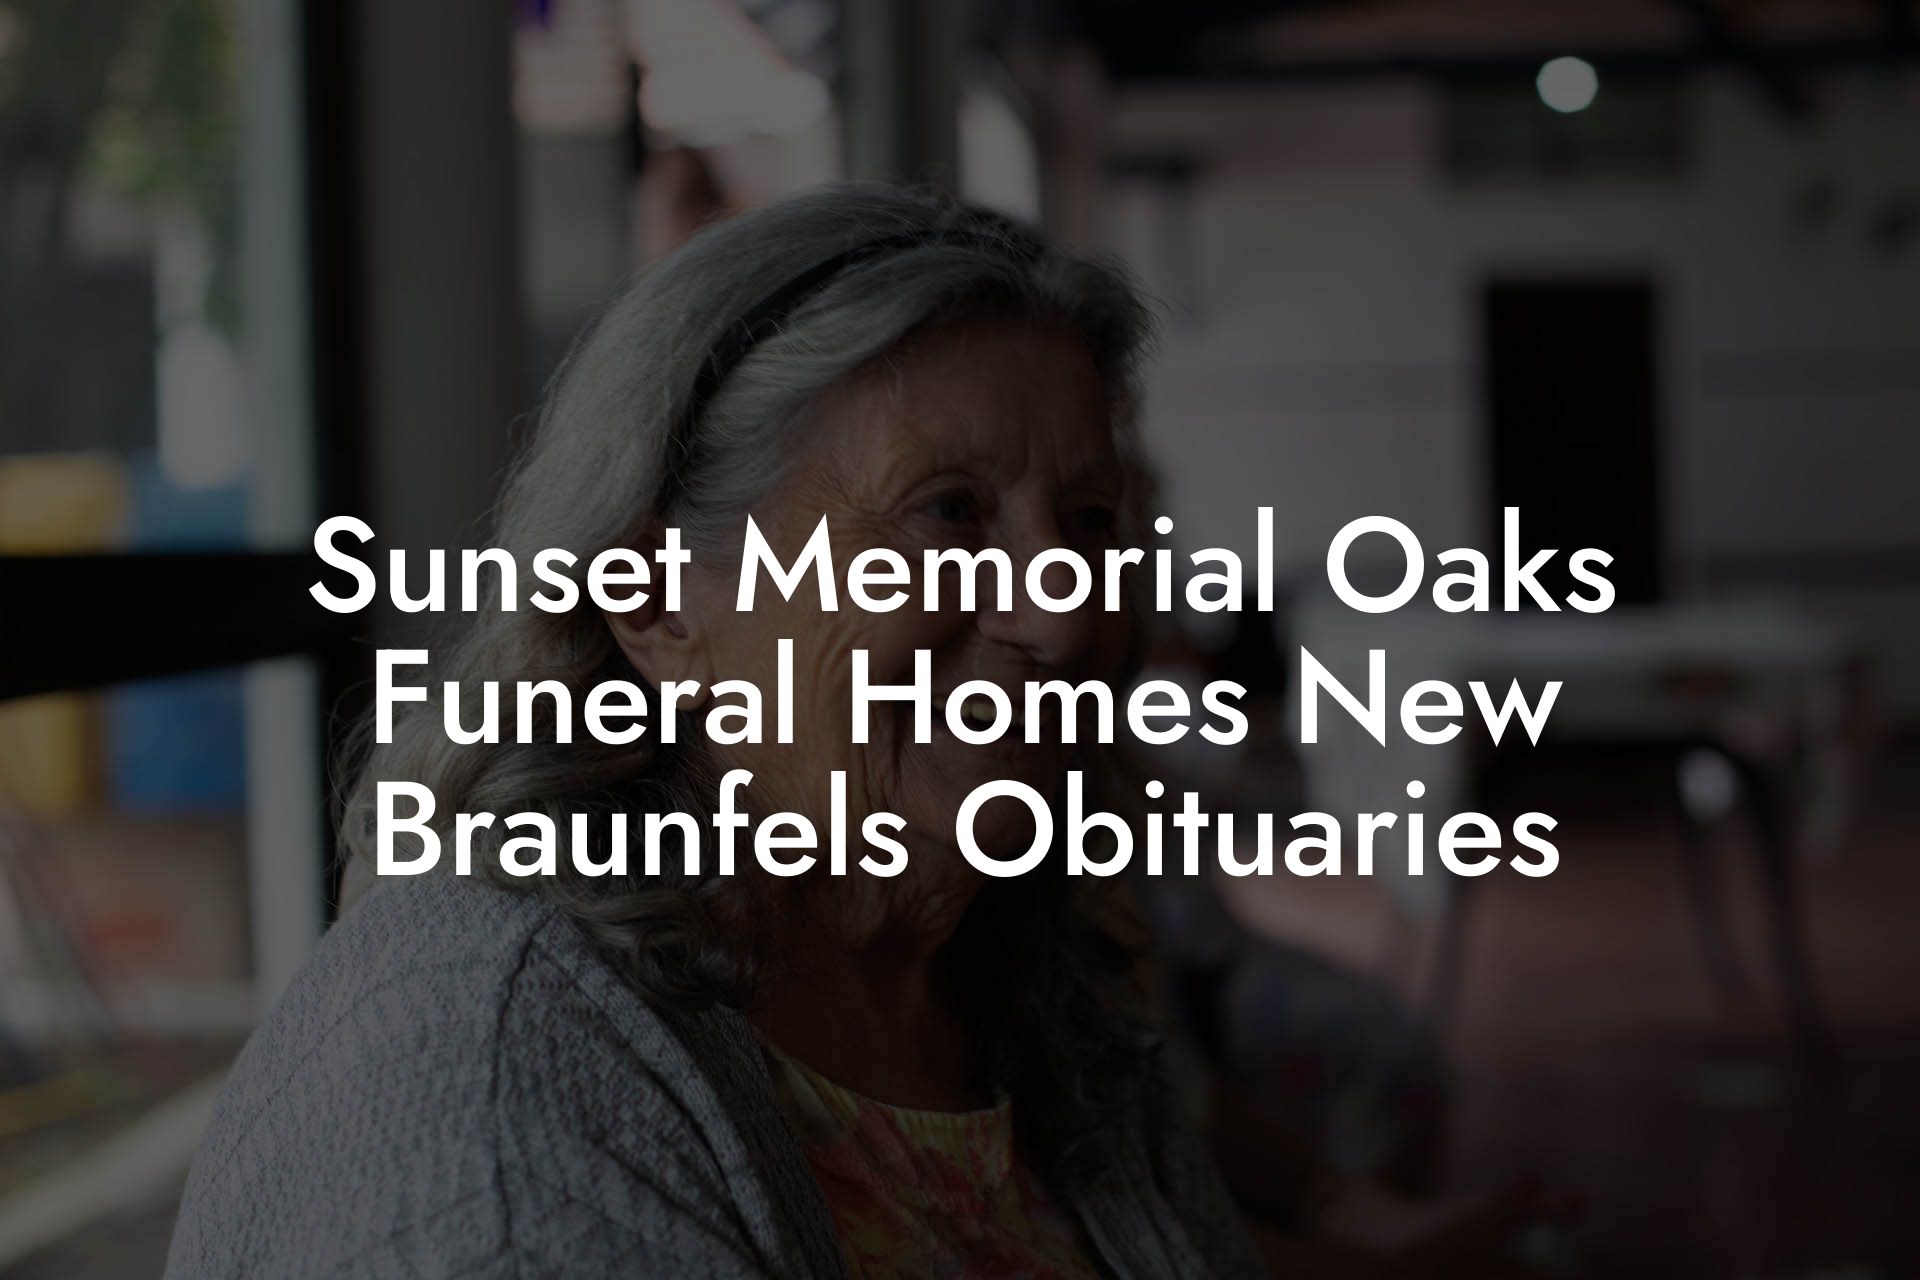 Sunset Memorial Oaks Funeral Homes New Braunfels Obituaries